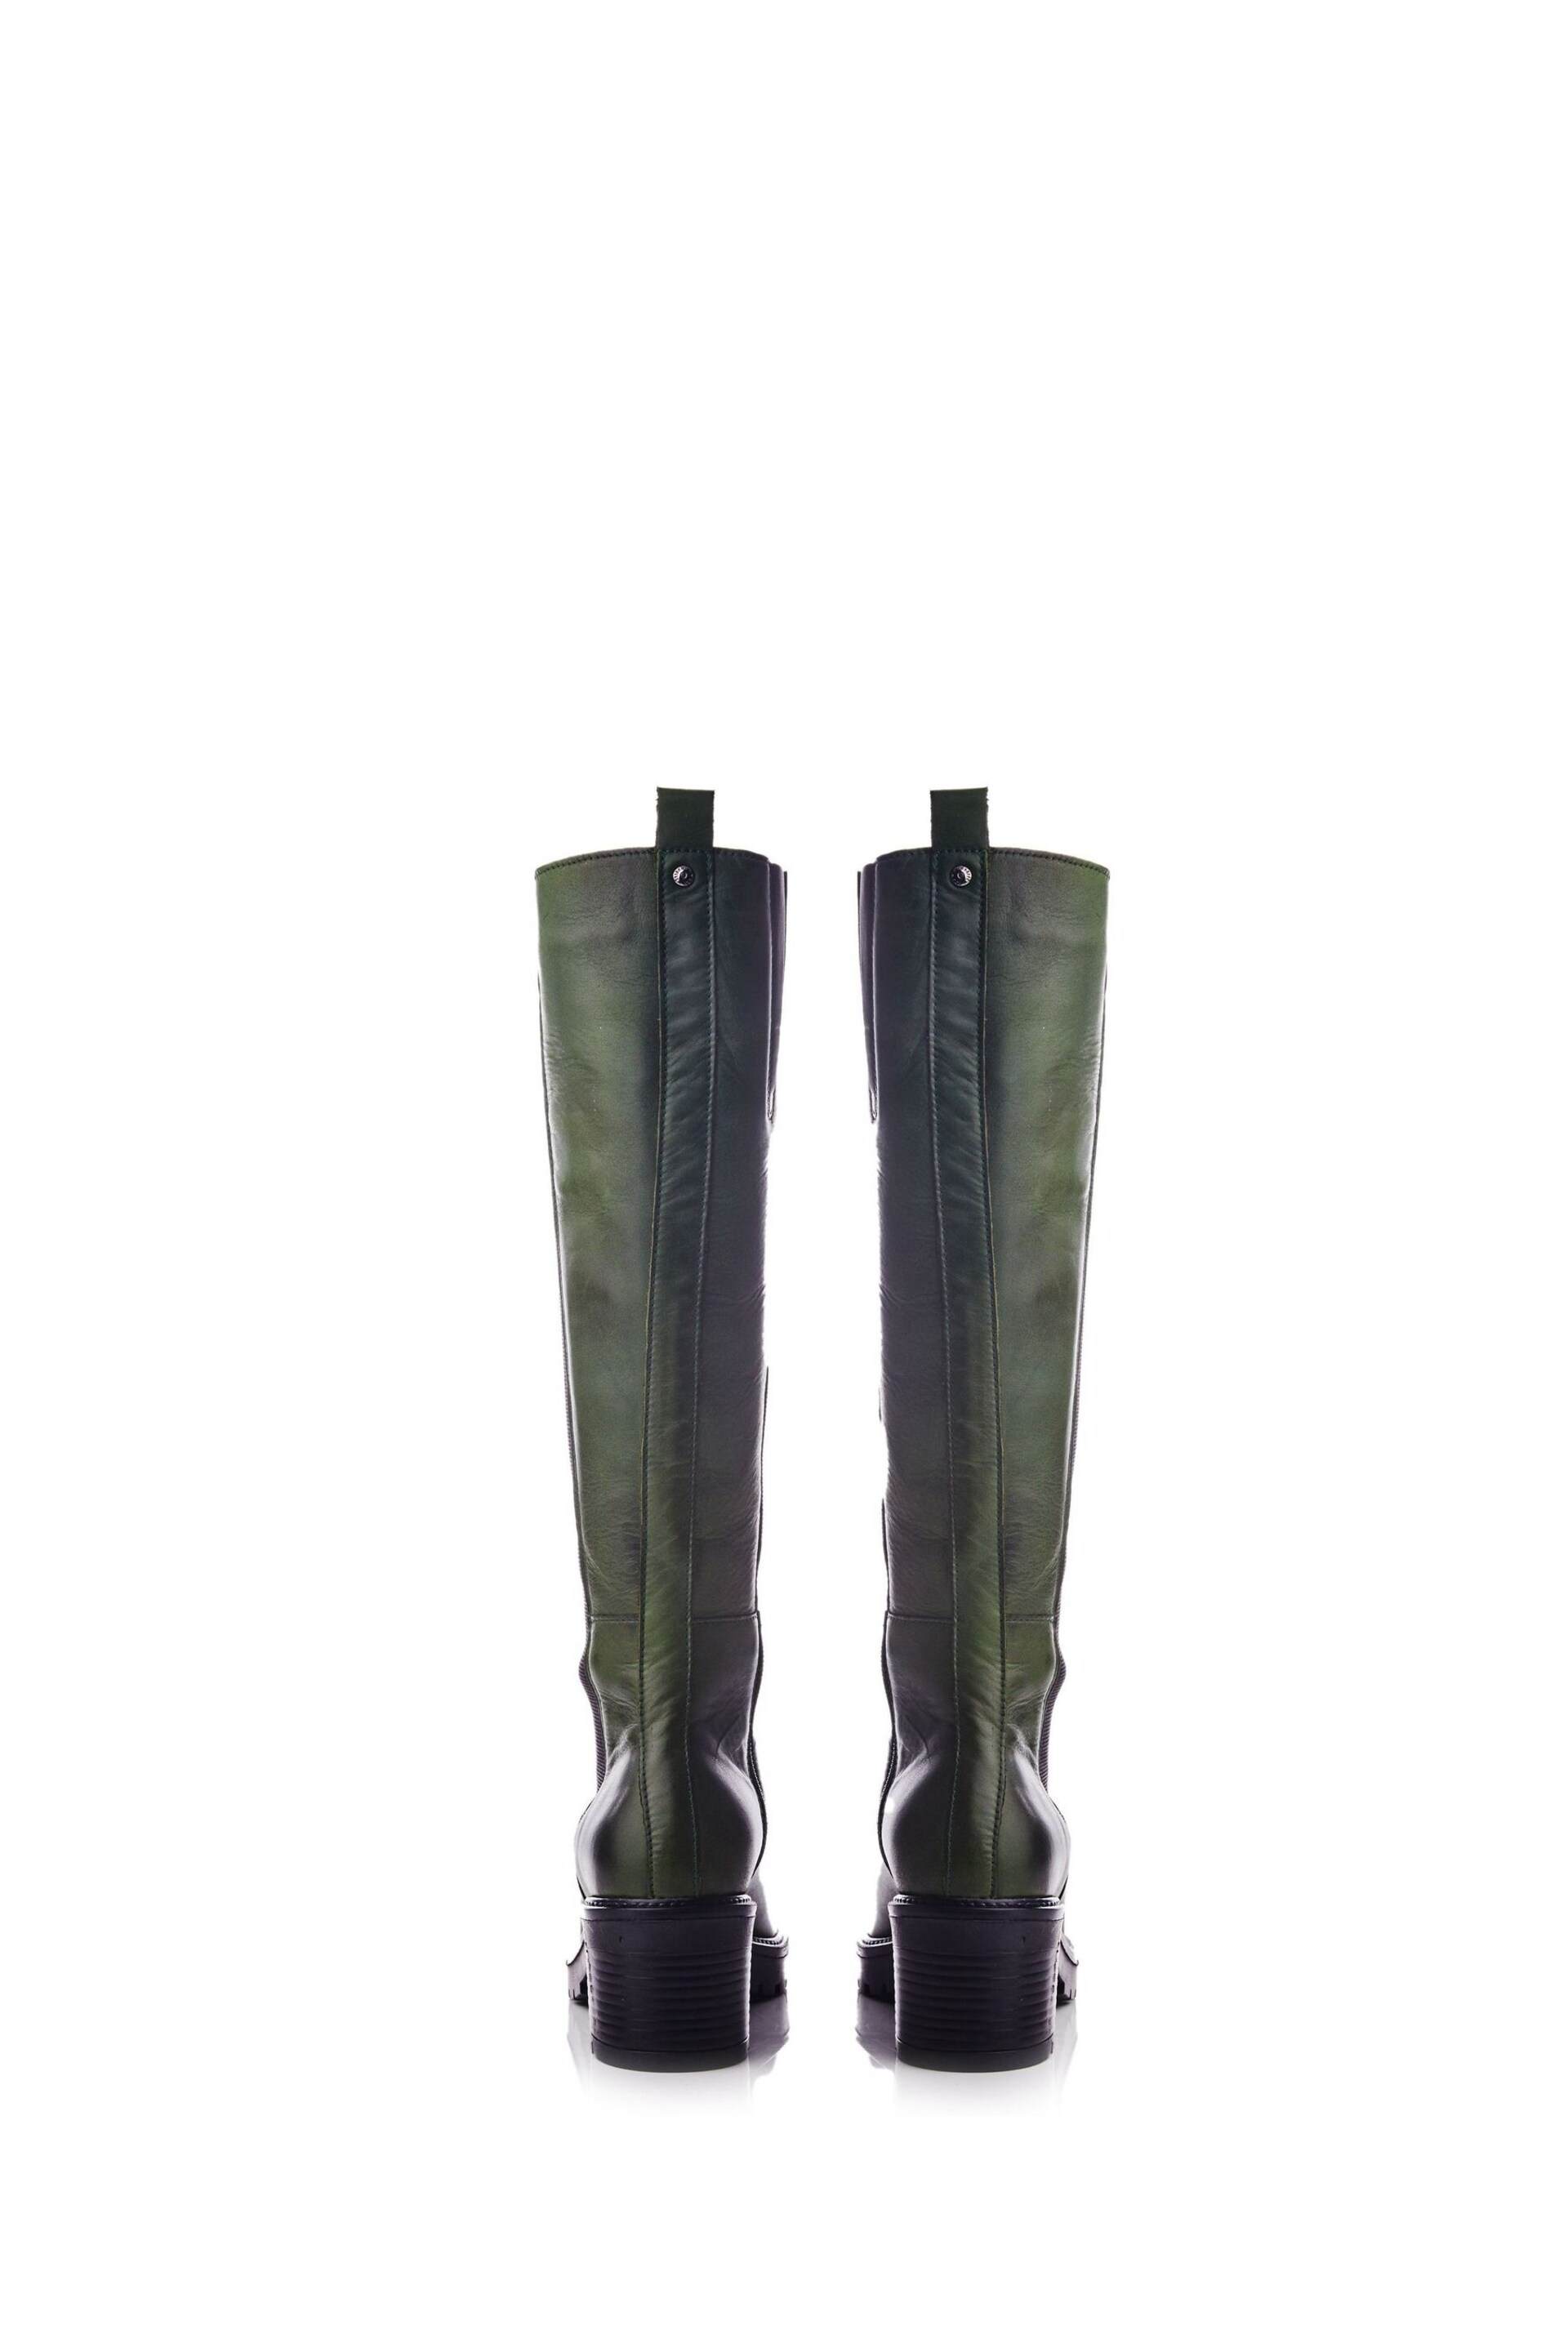 Moda in Pelle Linettie Long Chelsea Block Heel Boots - Image 3 of 3